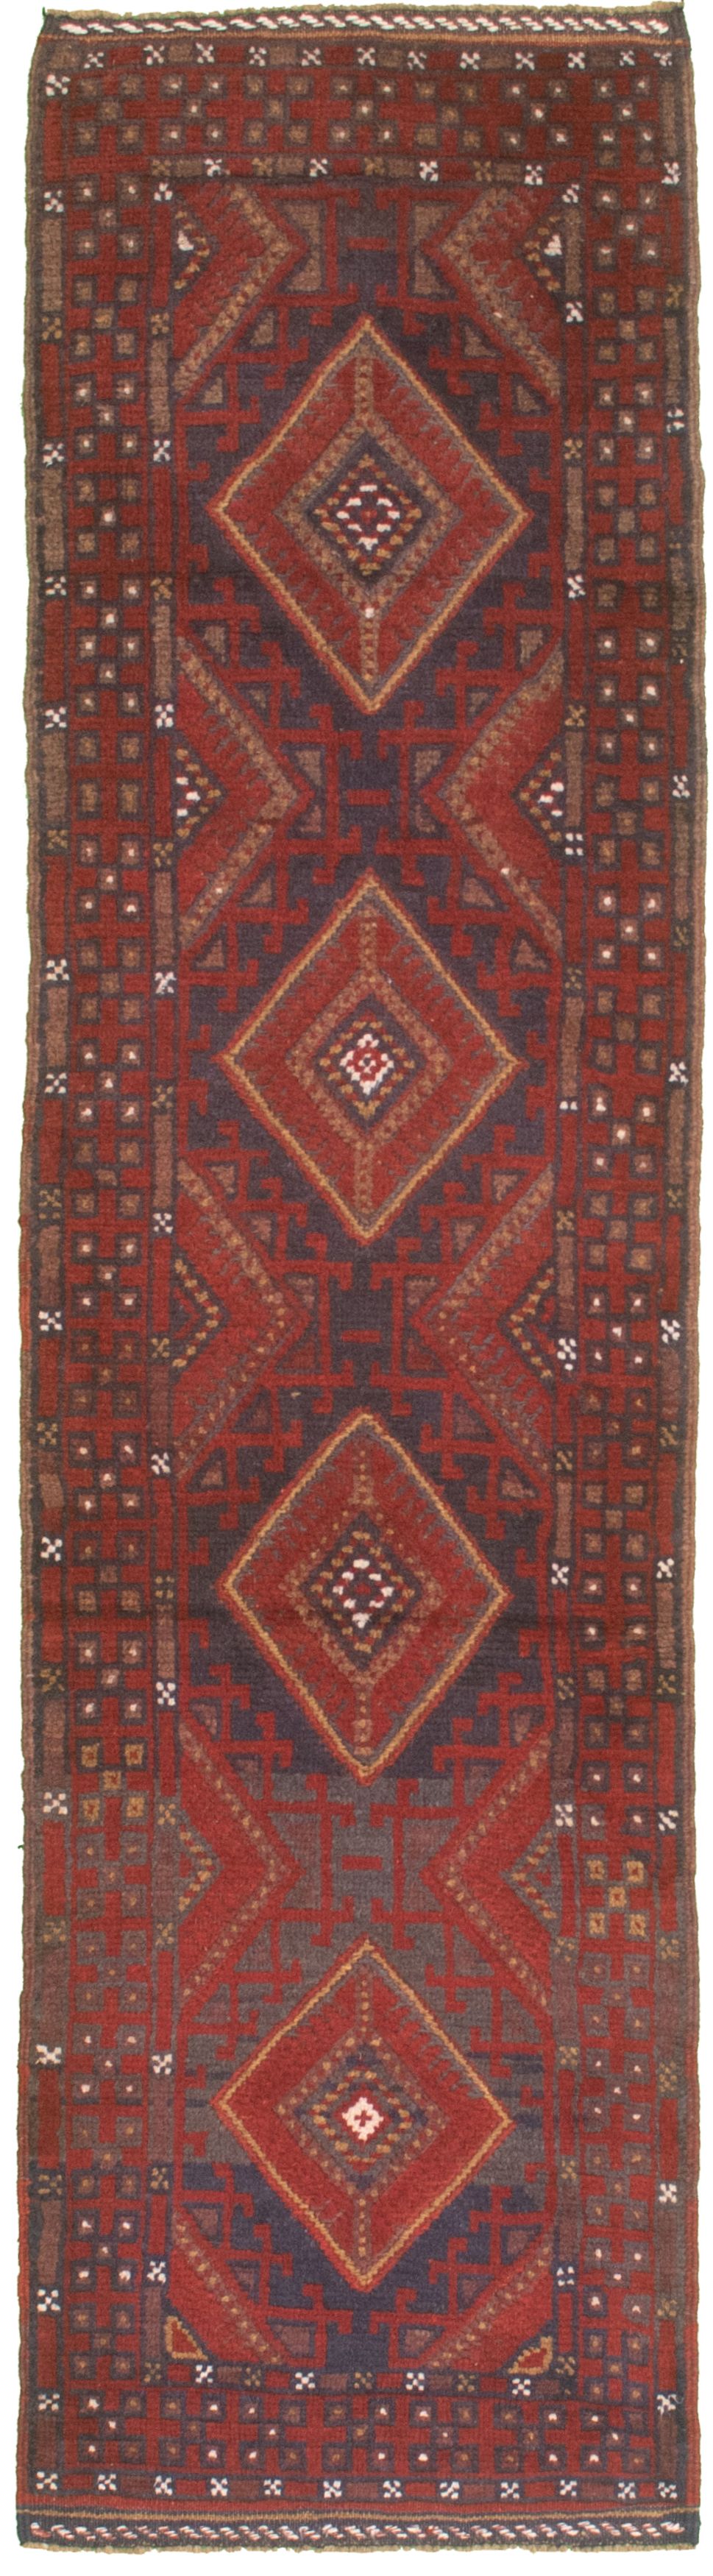 Hand-knotted Tajik Caucasian Red Wool Rug 2'1" x 8'3" (17) Size: 2'1" x 8'3"  